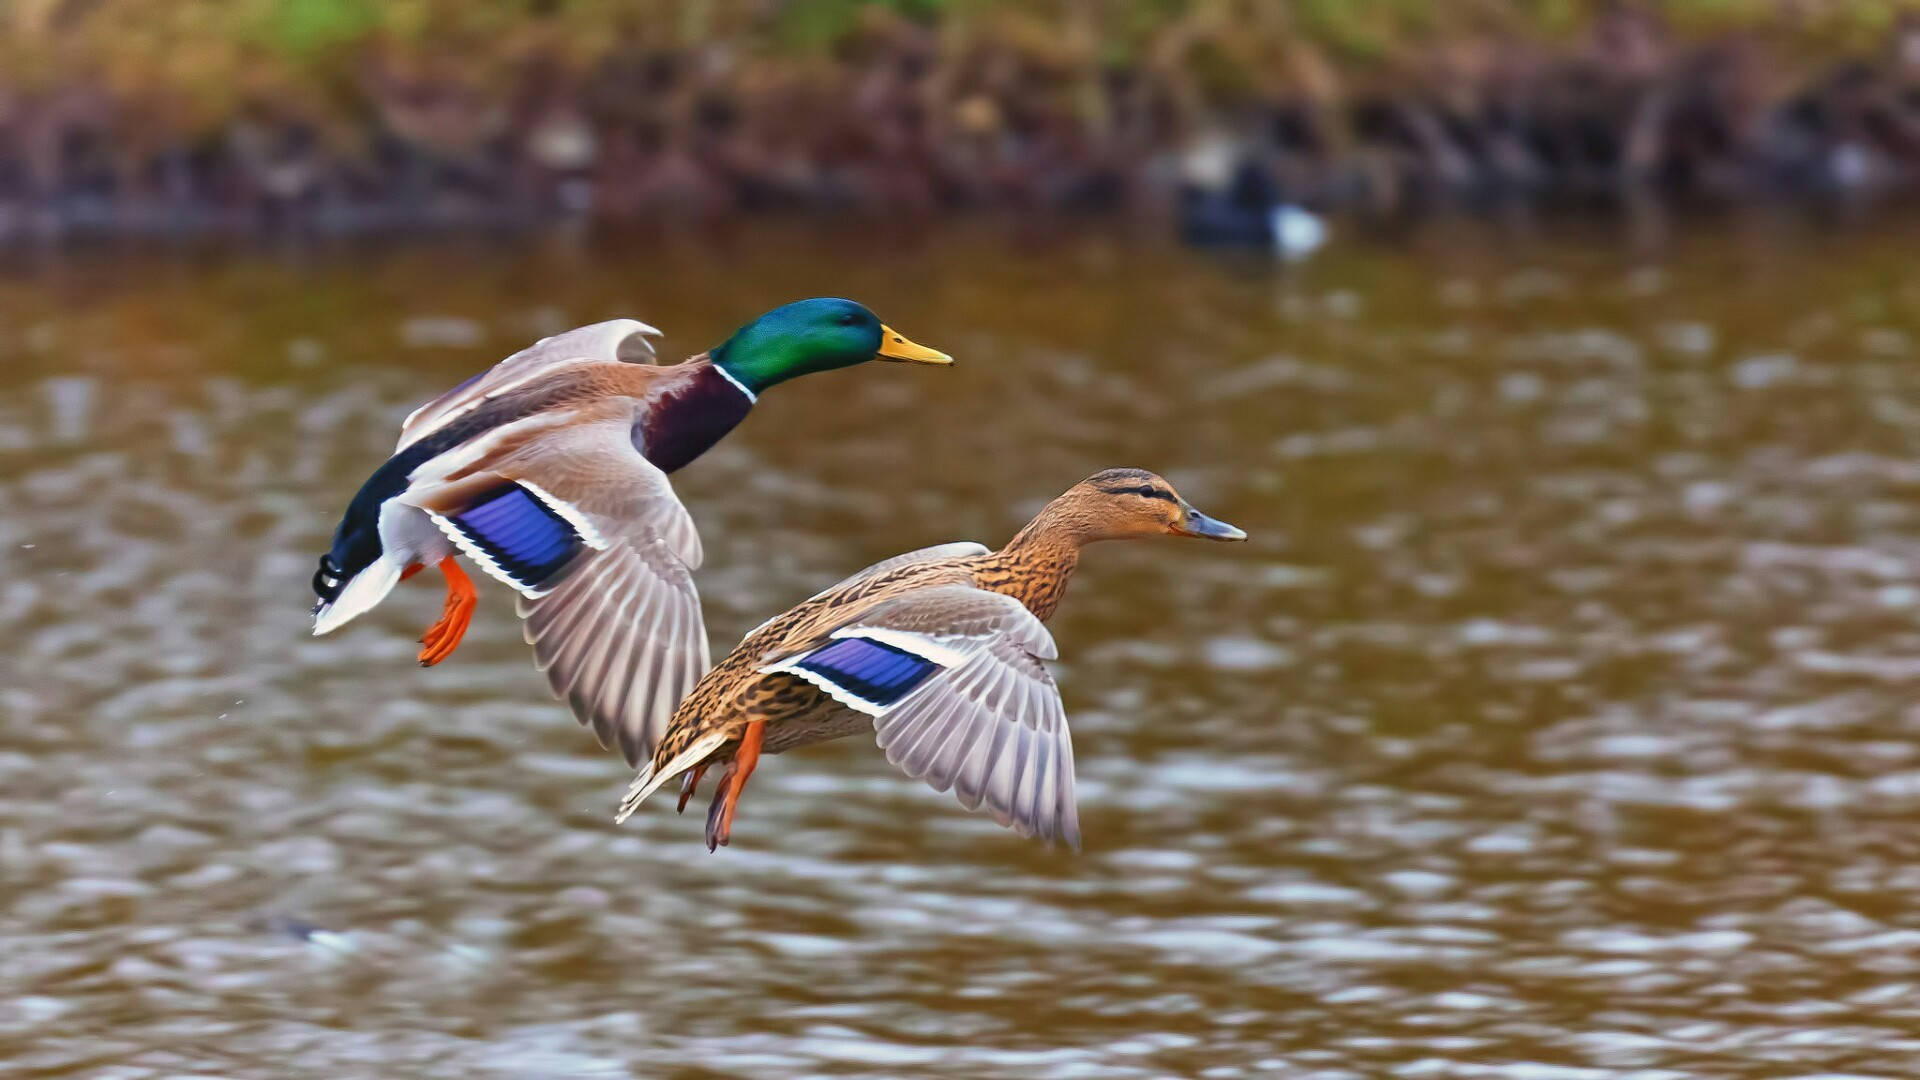 Two Ducks Flying Pfp Wallpaper